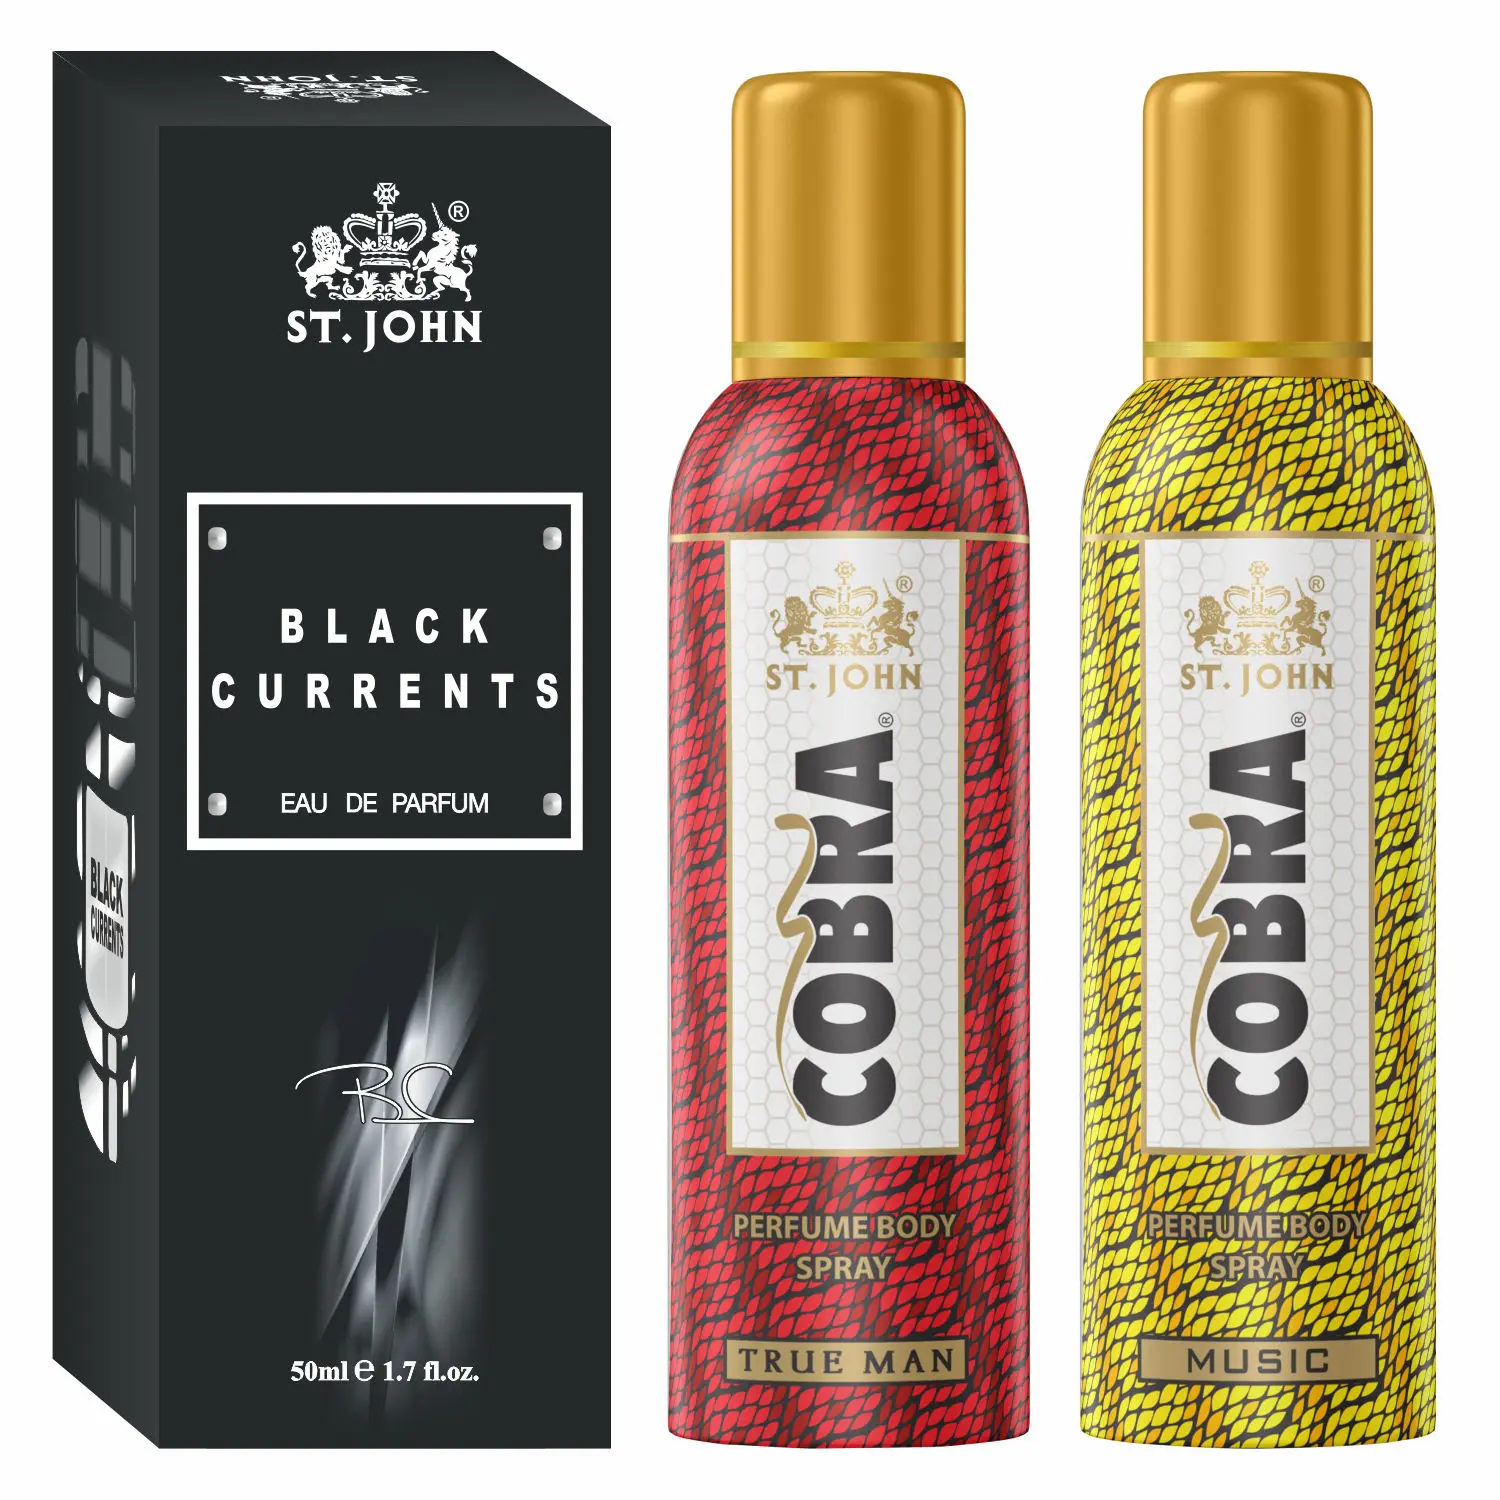 ST-JOHN Cobra No Gas Deodorant Music, True Man 100ml each & Black Current 50ml Combo Perfume Body Spray - For Men & Women (250 ml, Pack of 3)